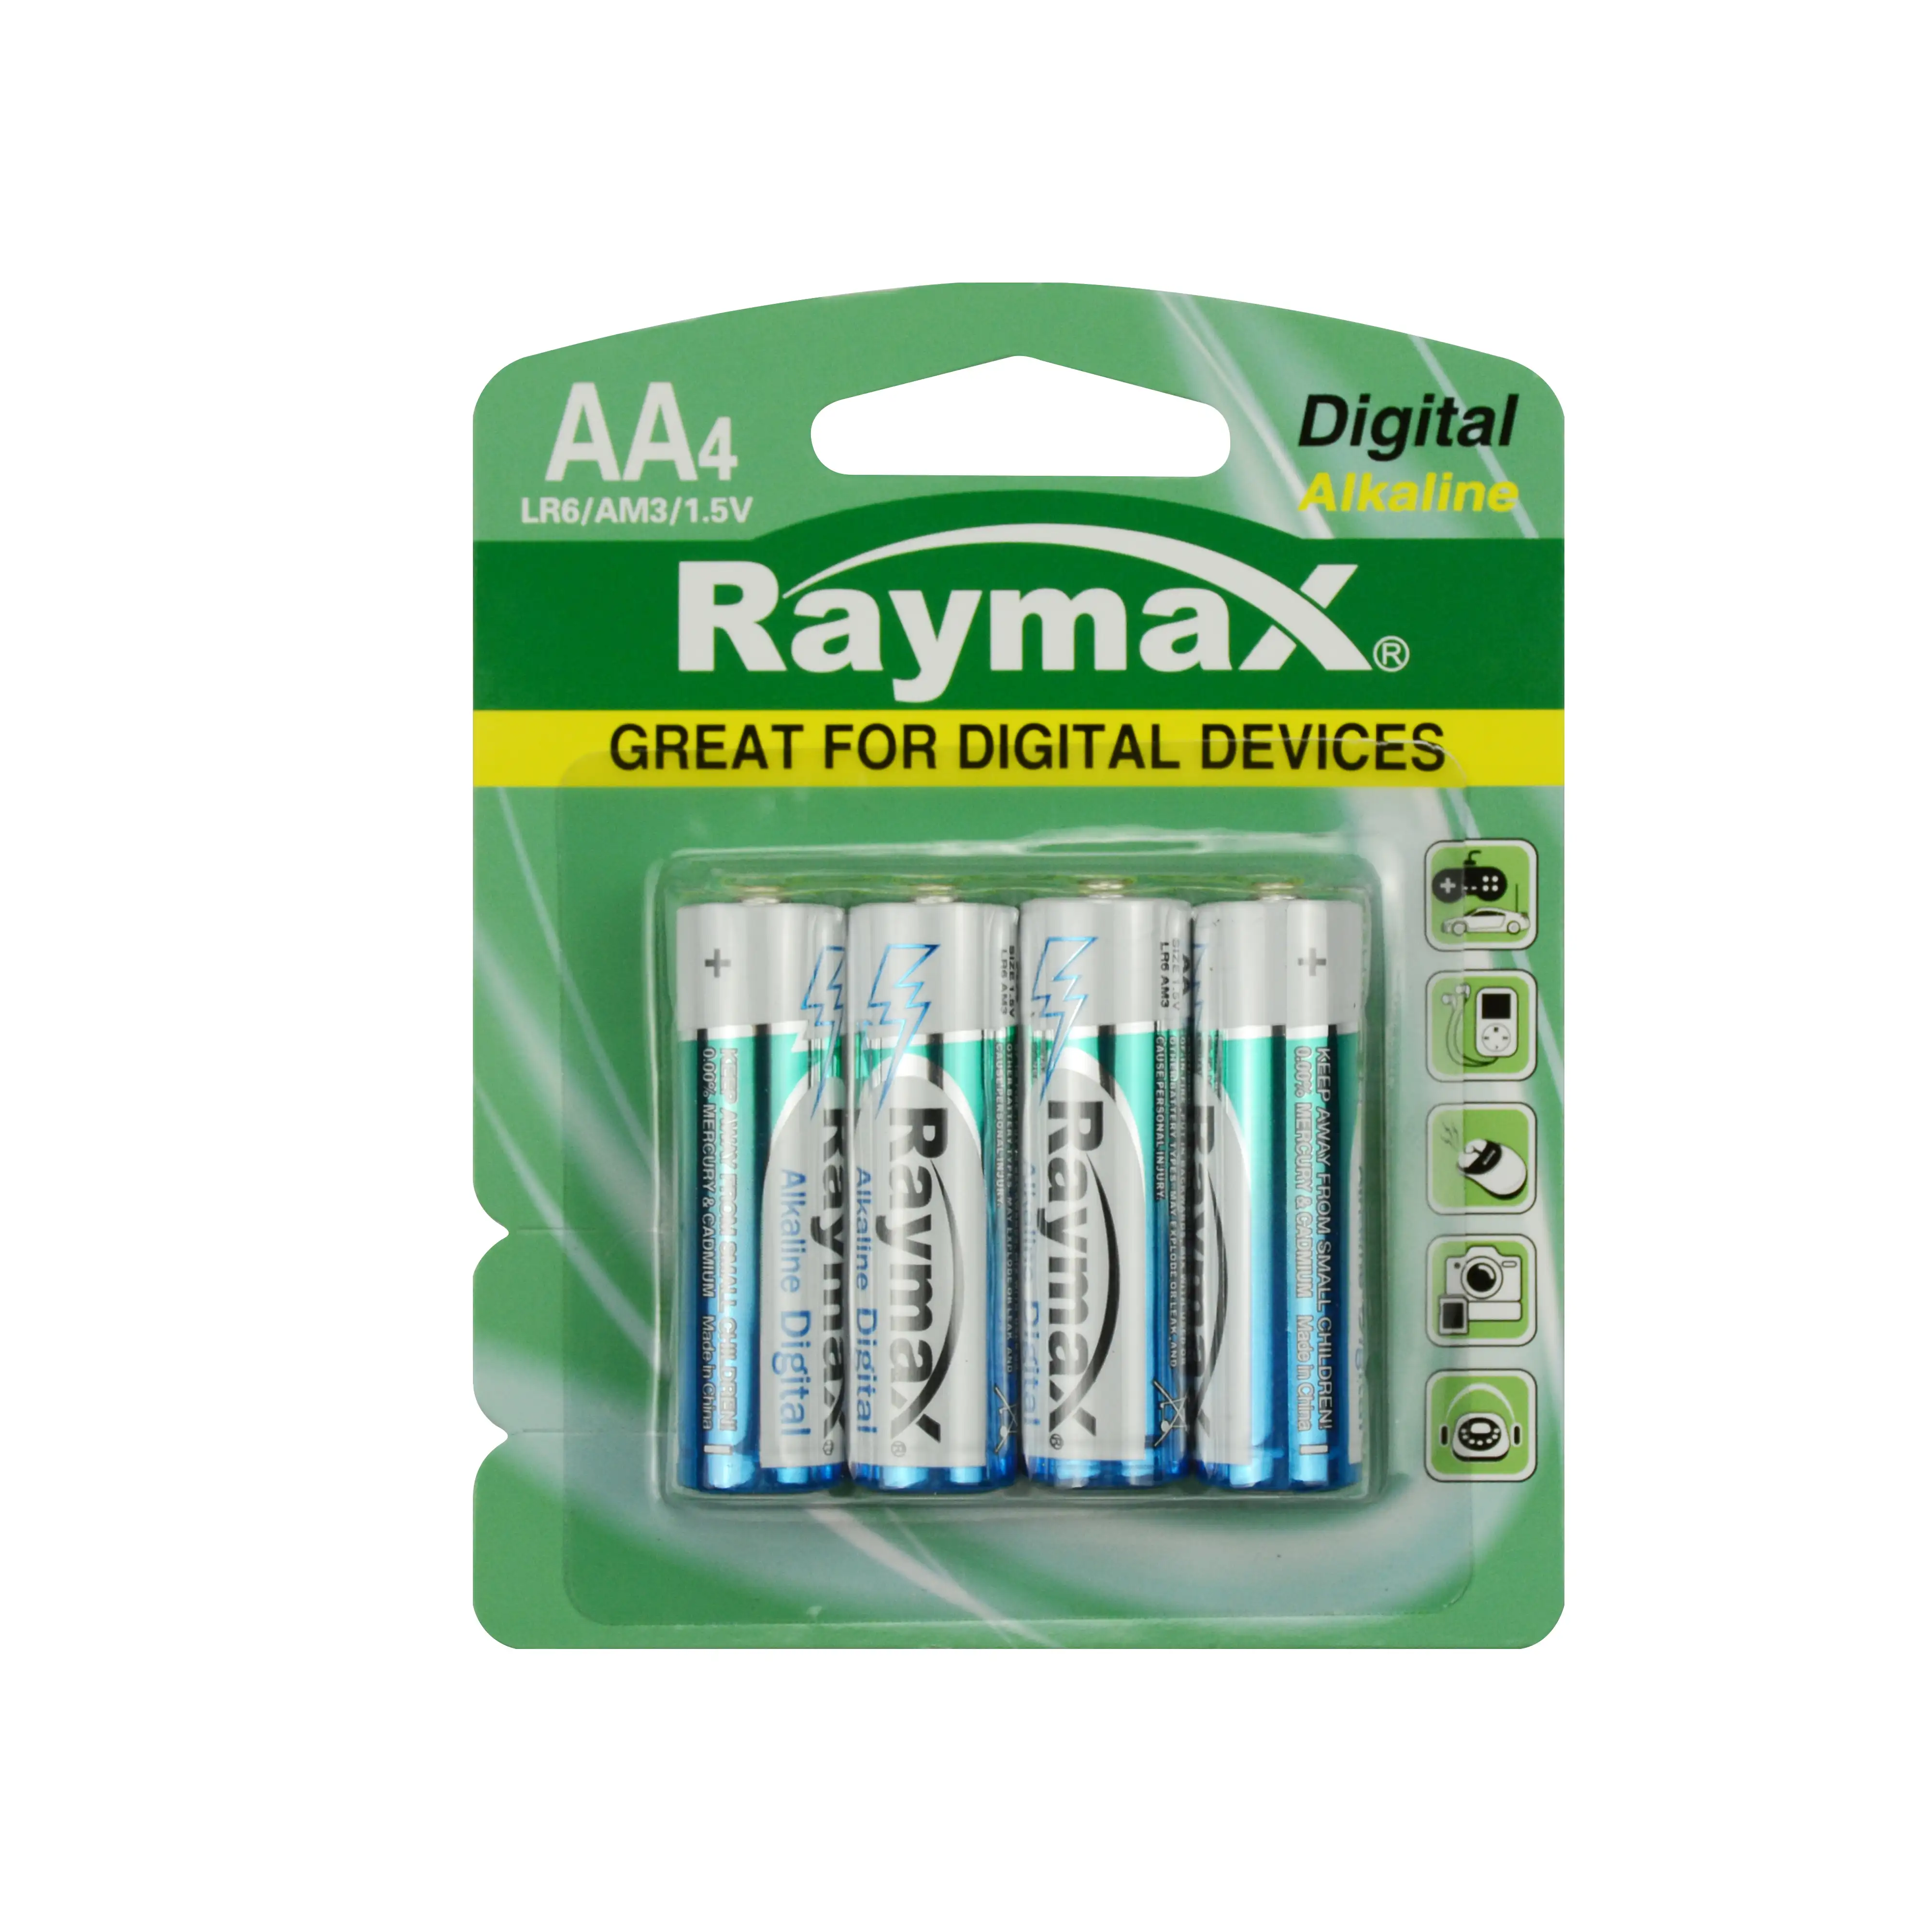 Batteria alcalina digitale all'ingrosso OEM Raymax Private Label LR6 AM3 1.5v 2700mAh AA